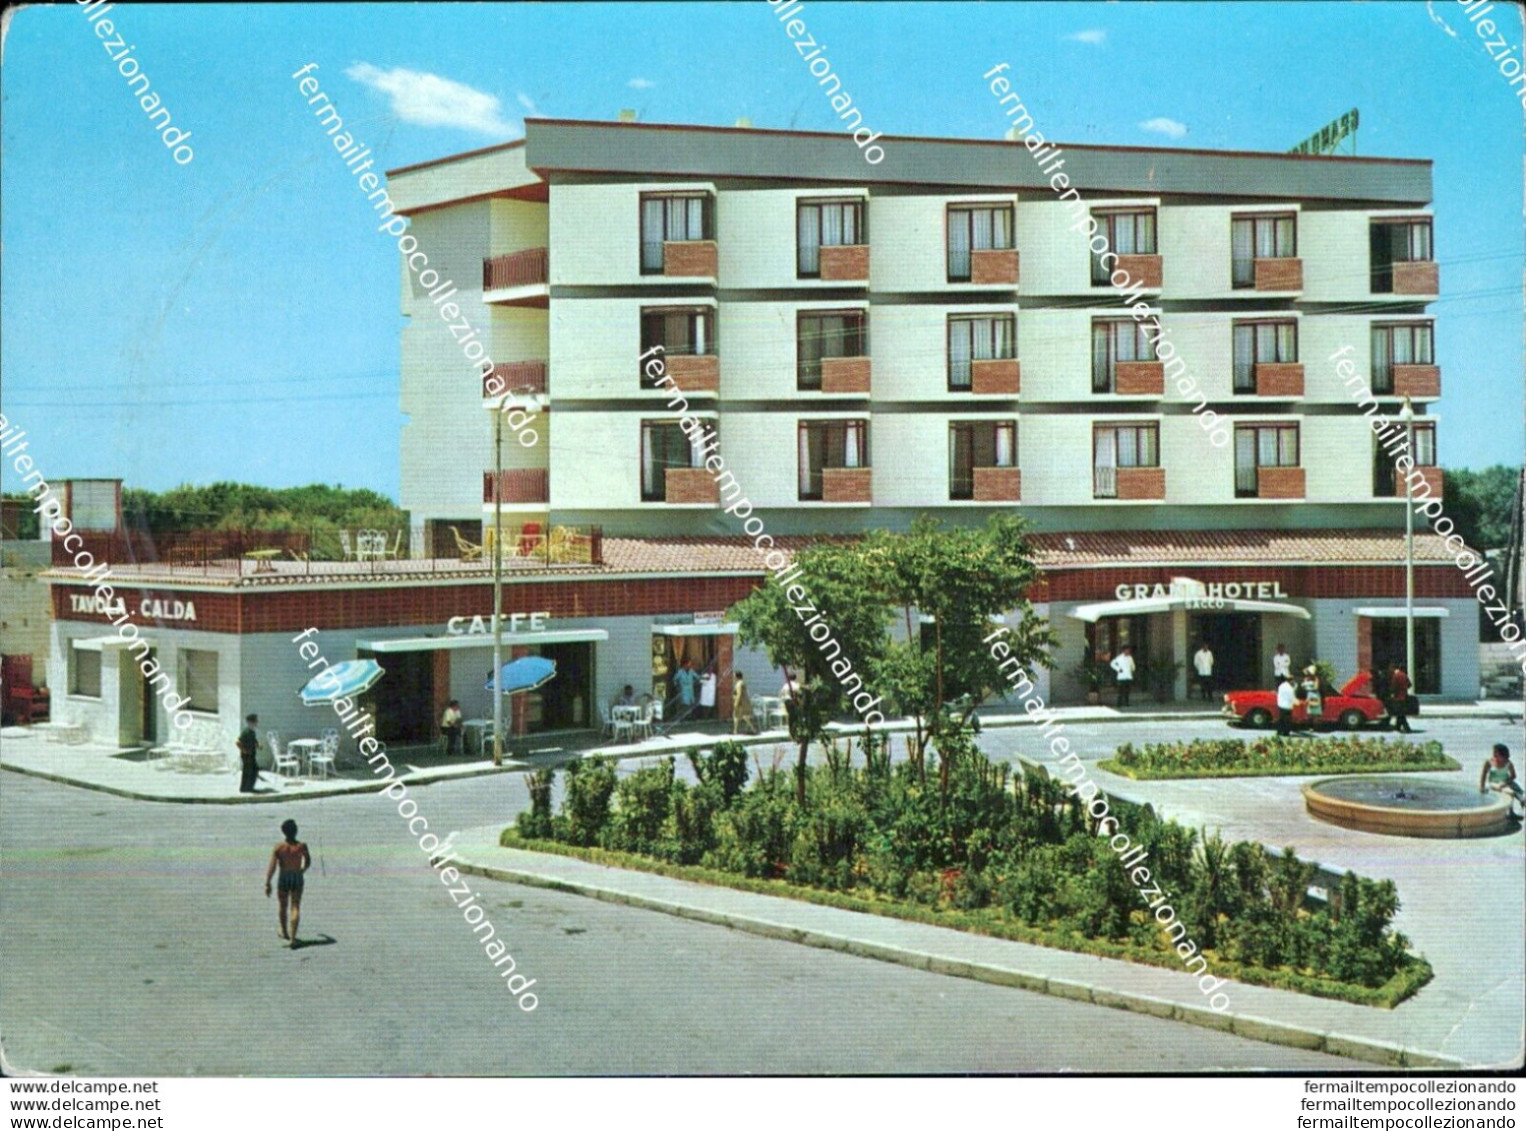 Bl422 Cartolina Metaponto Grand Hotel Sacco Provincia Di Matera - Matera